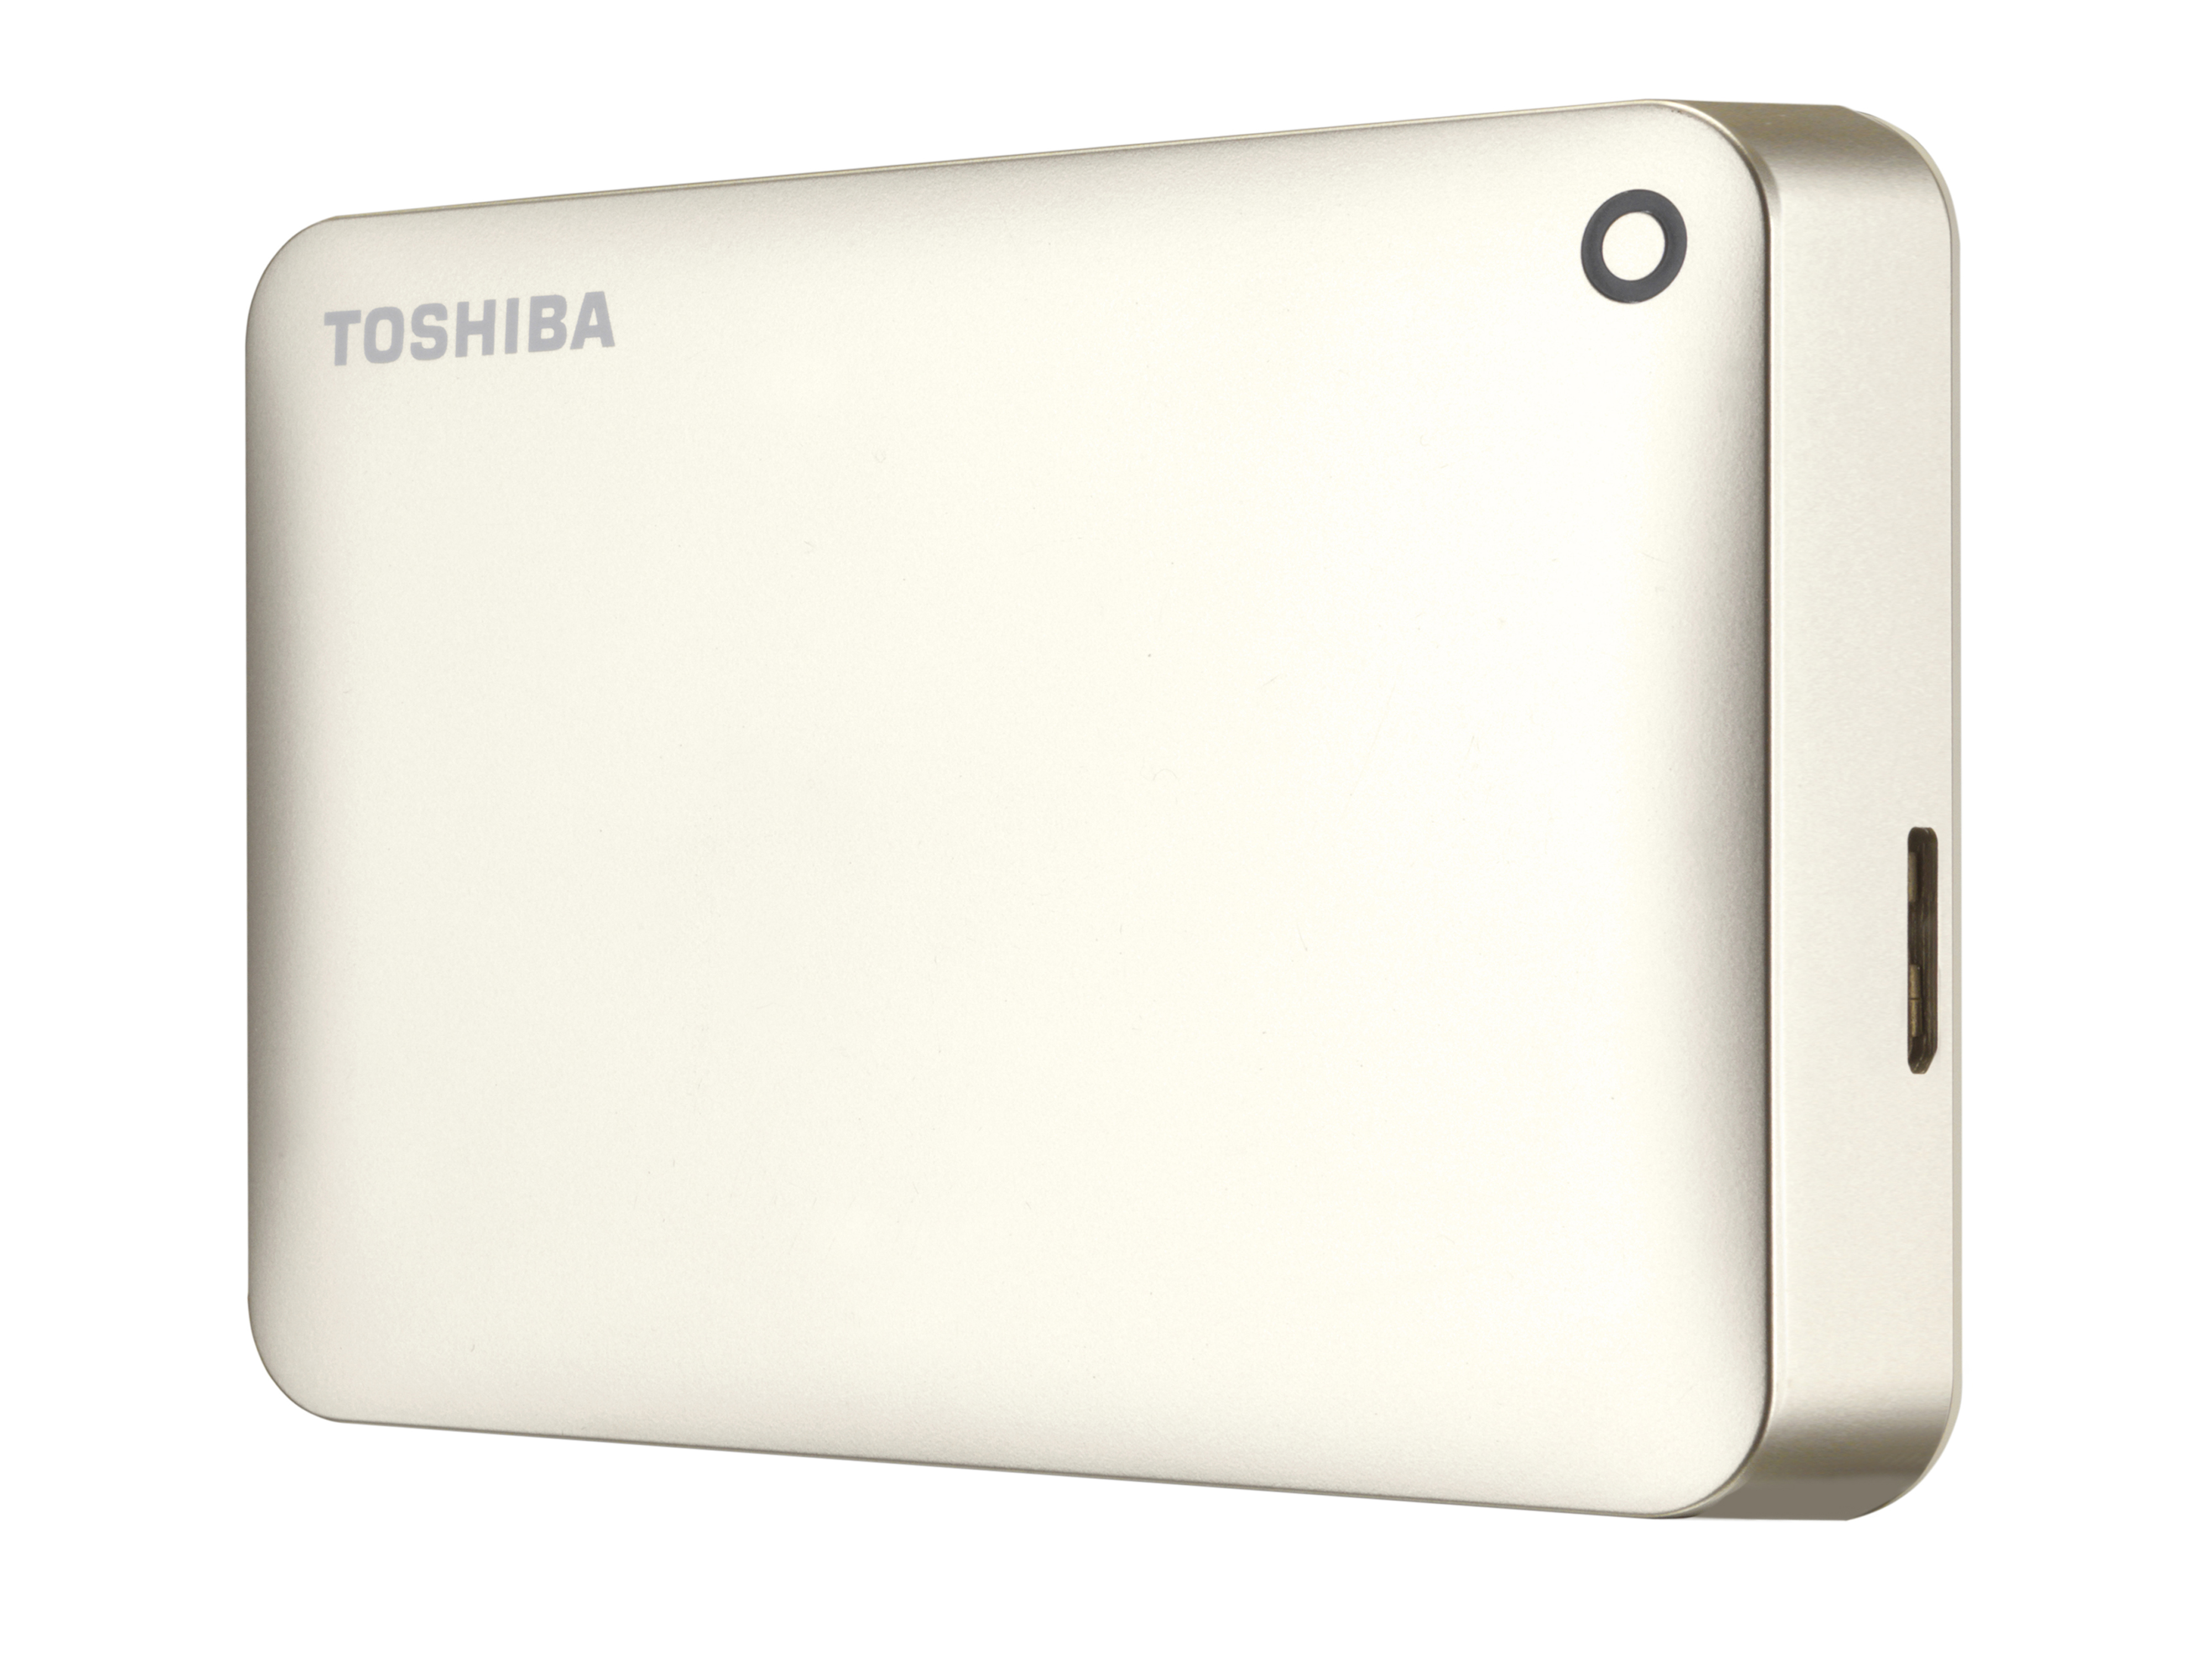 TOSHIBA Canvio Connect extern, II Gold HDD, Zoll, 2 Festplatte, 2,5 TB